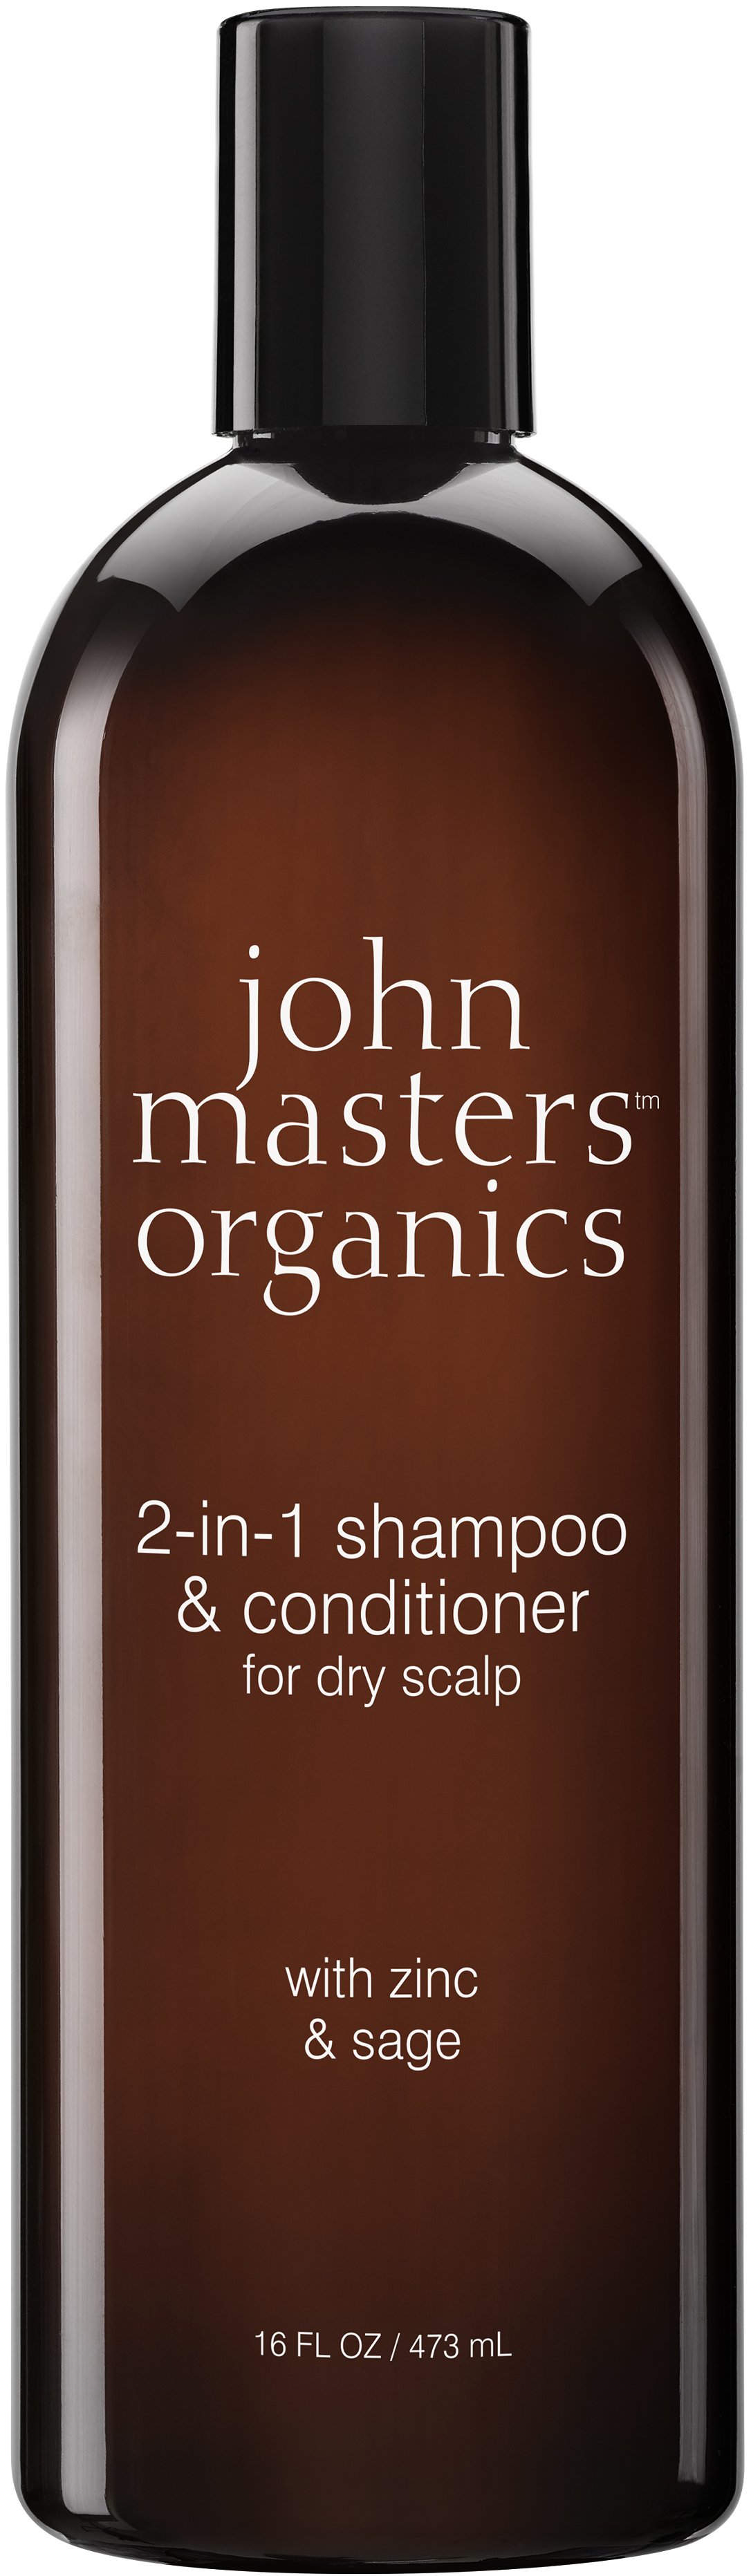 John Masters Organics - Zinc & Sage  Shampoo With Conditioner 473 ml